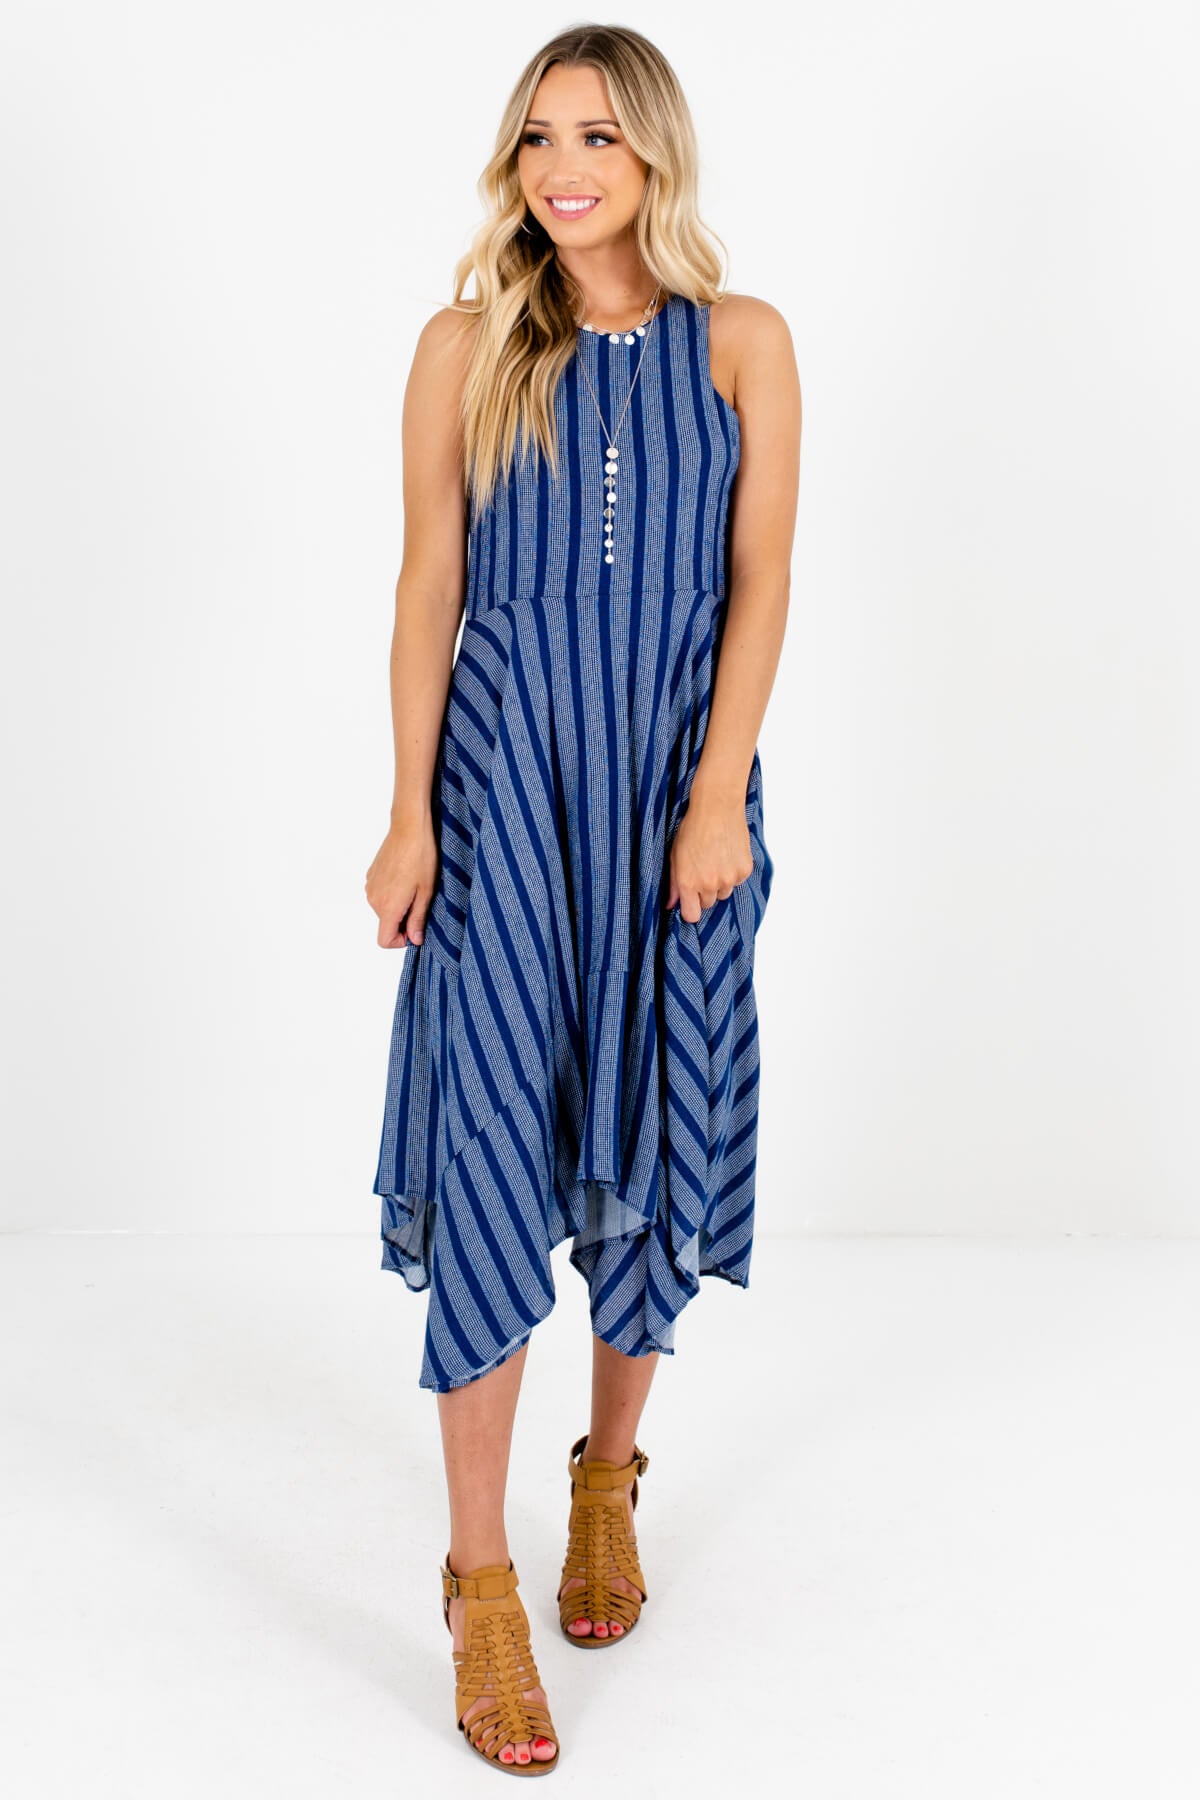 Women's Blue and White Striped Back Zipper Boutique Dresses